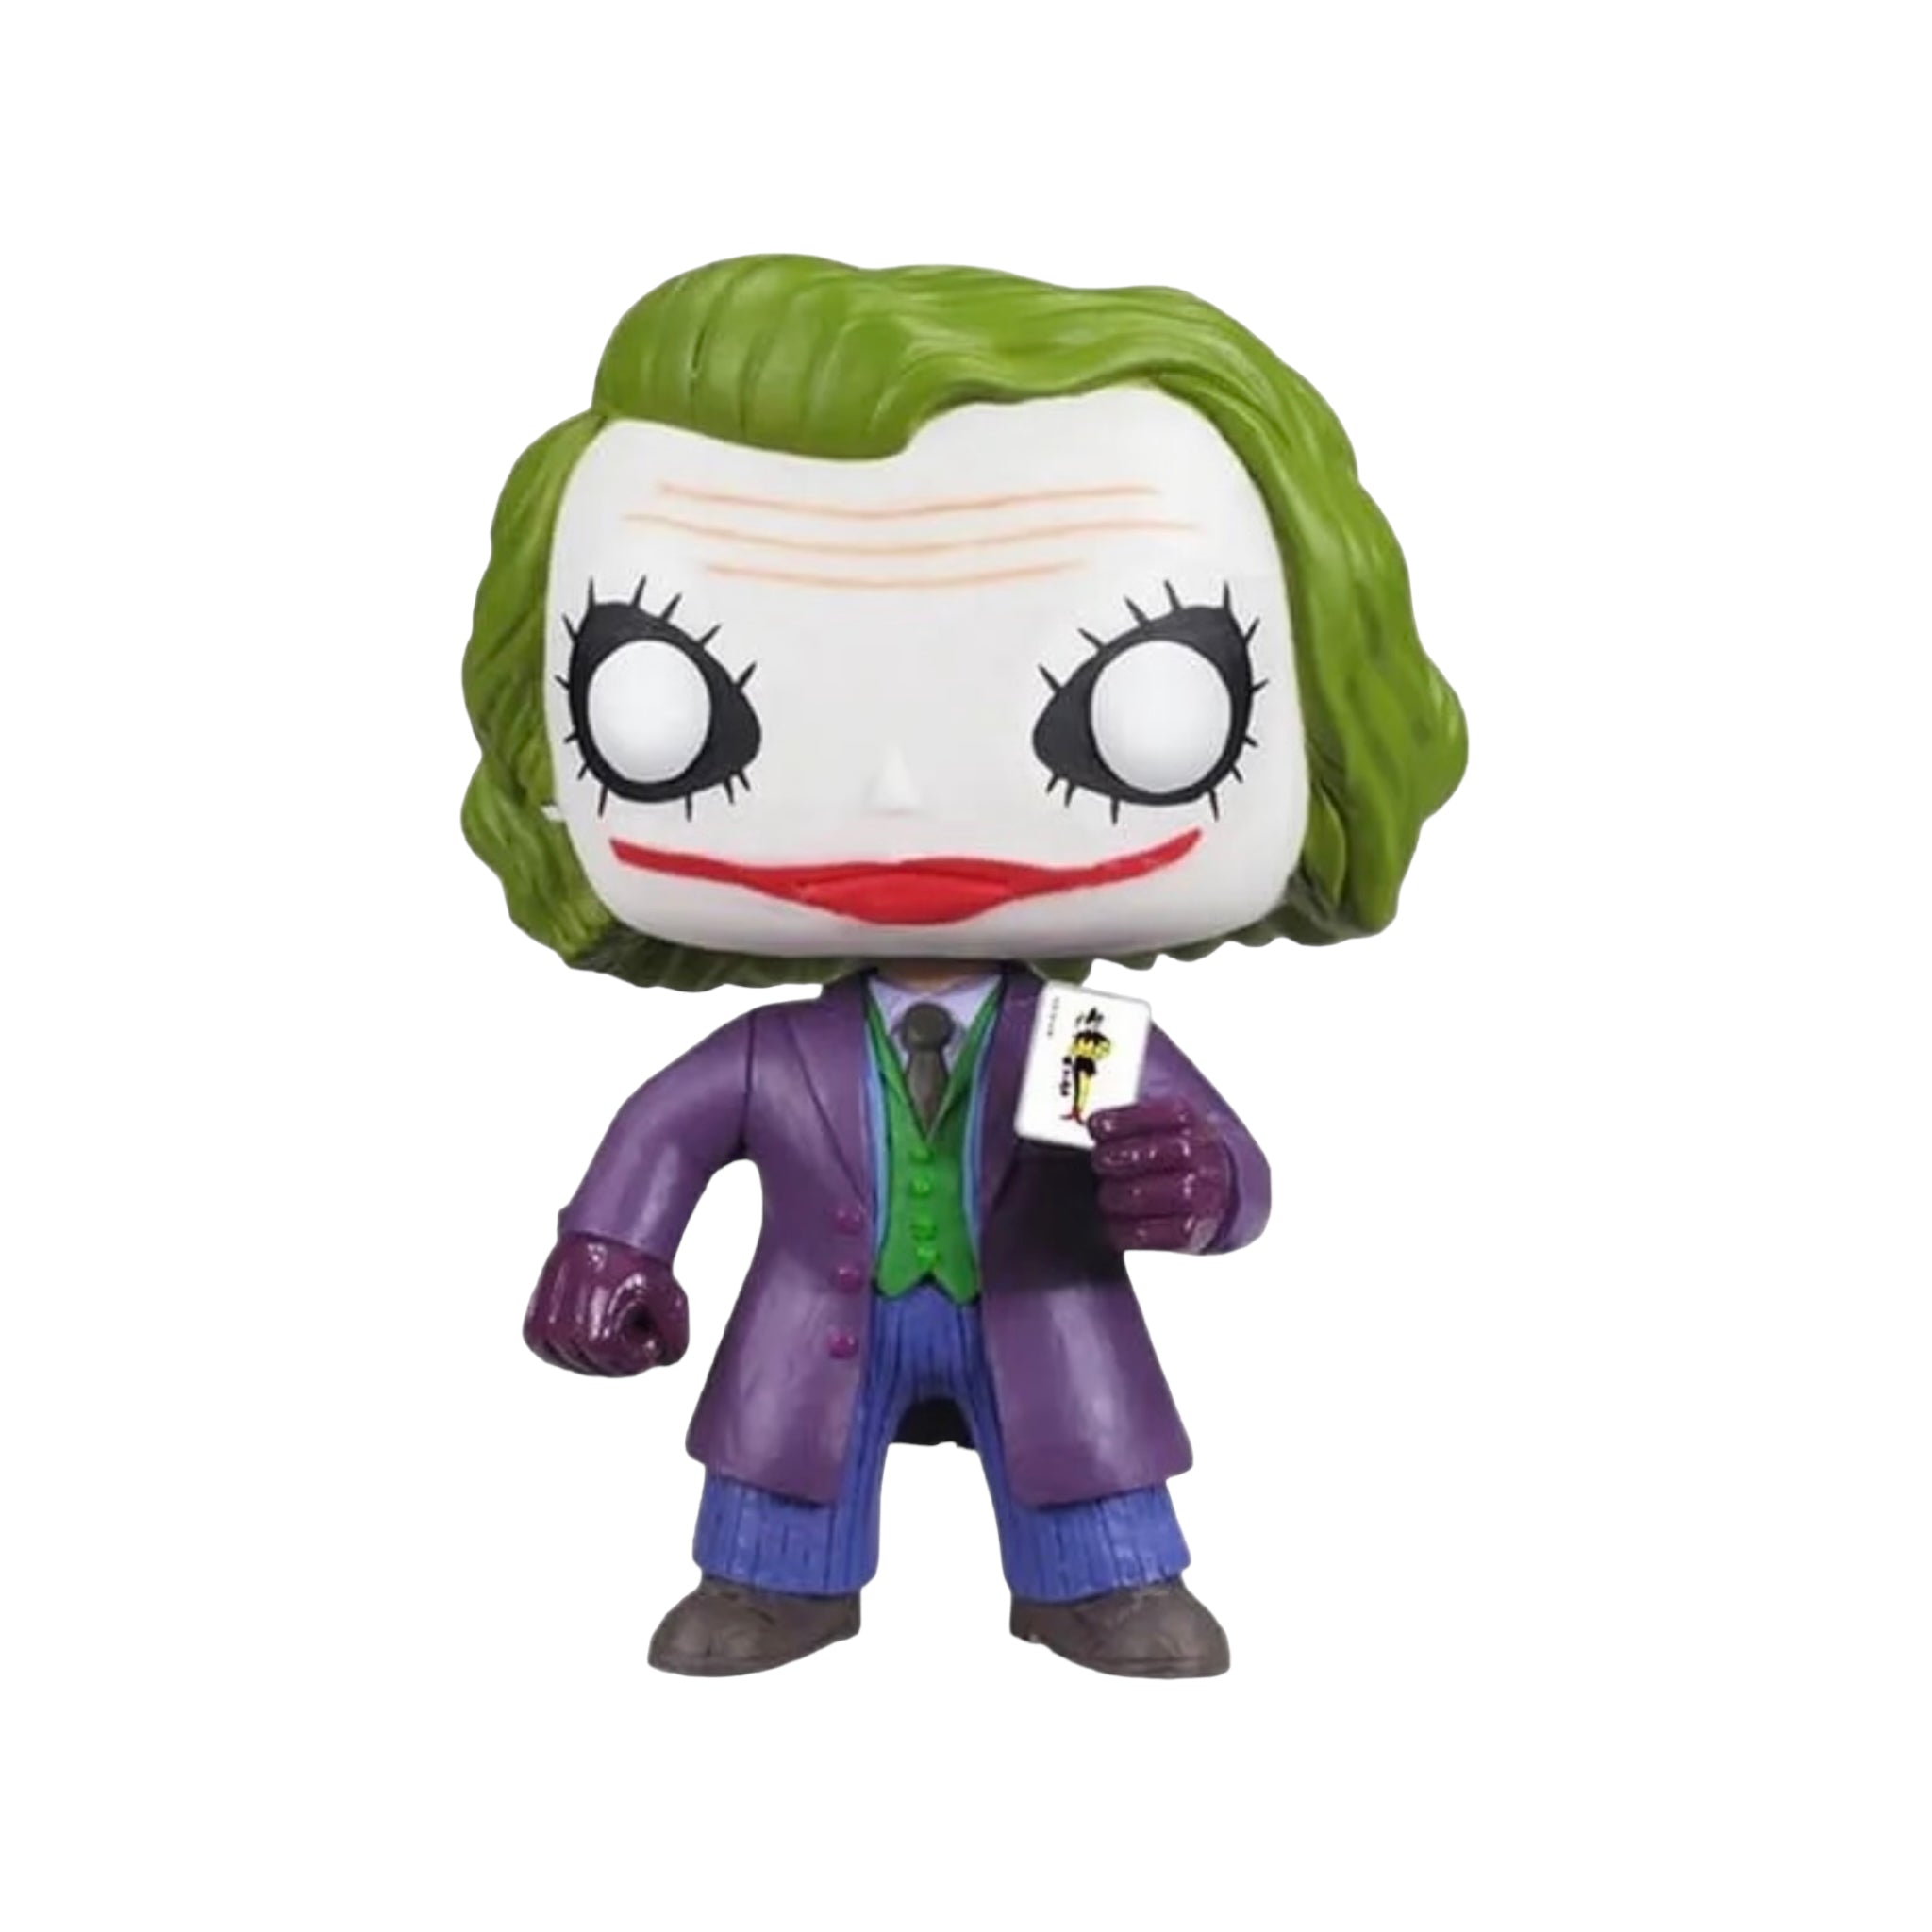 The Joker #36 Funko Pop! - The Dark Knight Trilogy